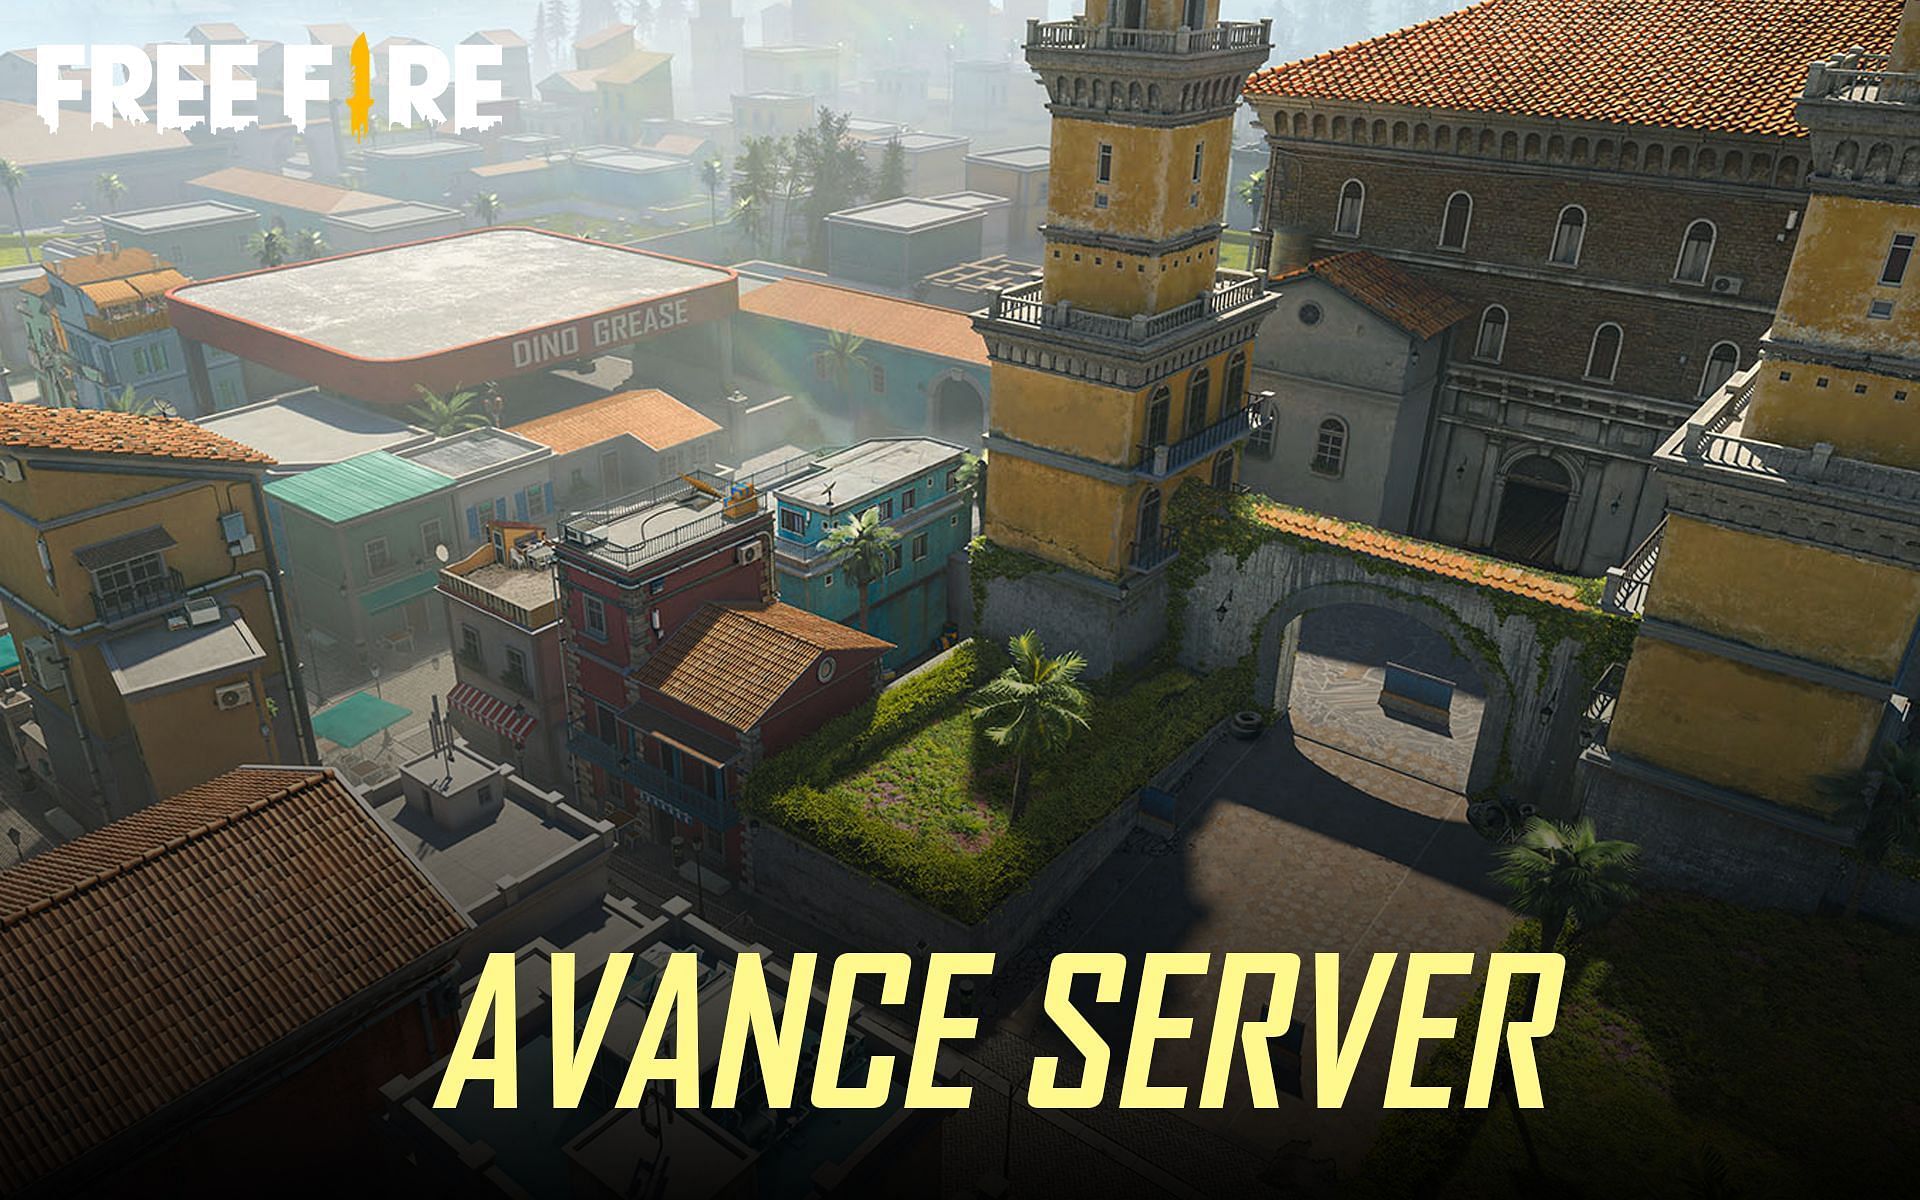 OB35 Advance Server for the game is now live (Image via Sportskeeda)